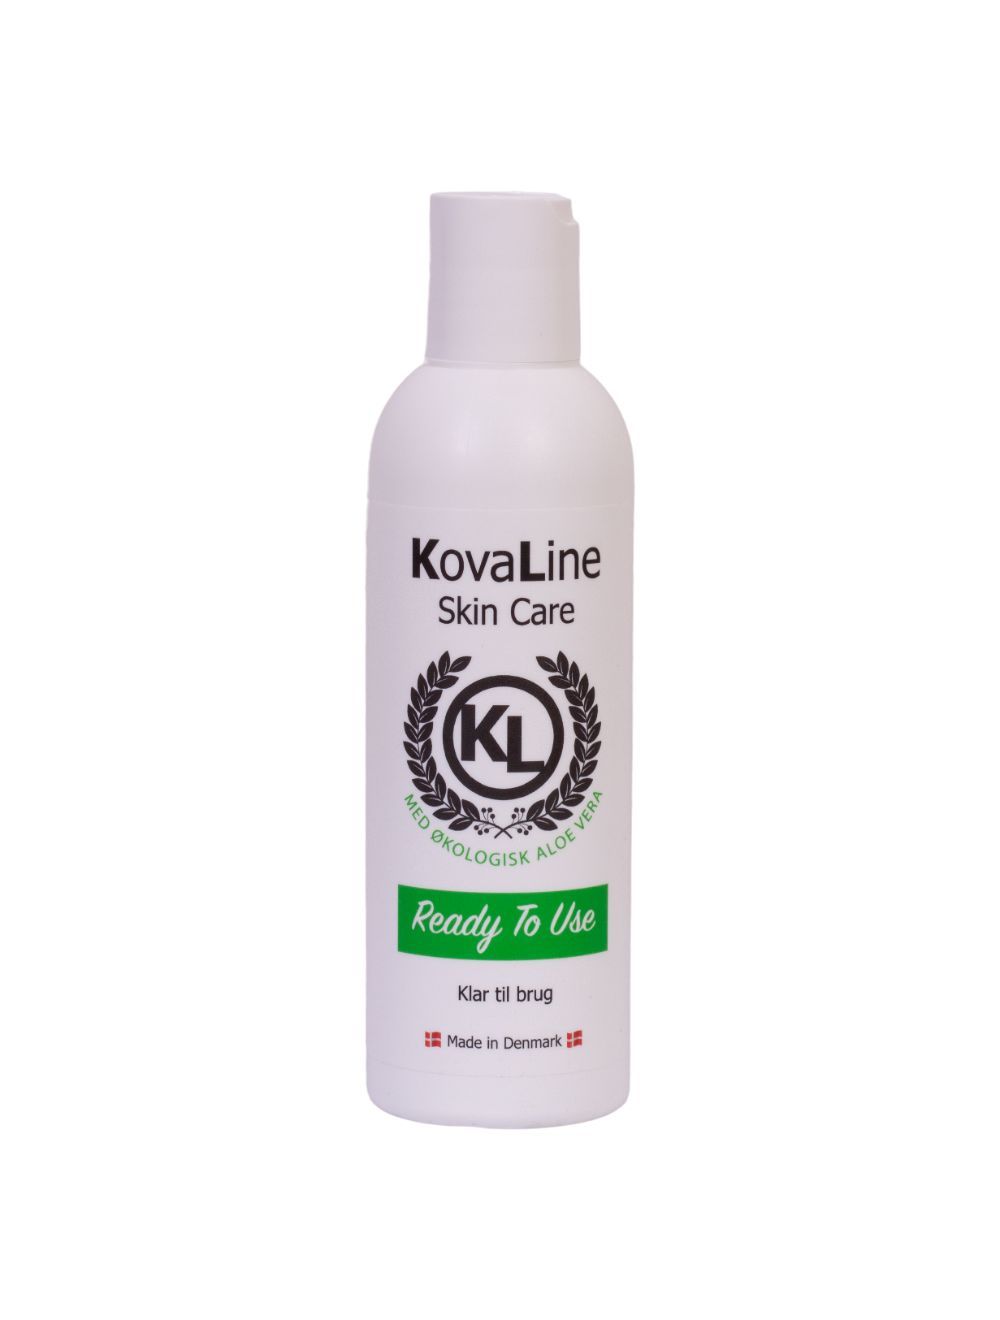 KovaLine - Ready to use, Aloe vera - 200ml - (571326900020), Kovaline